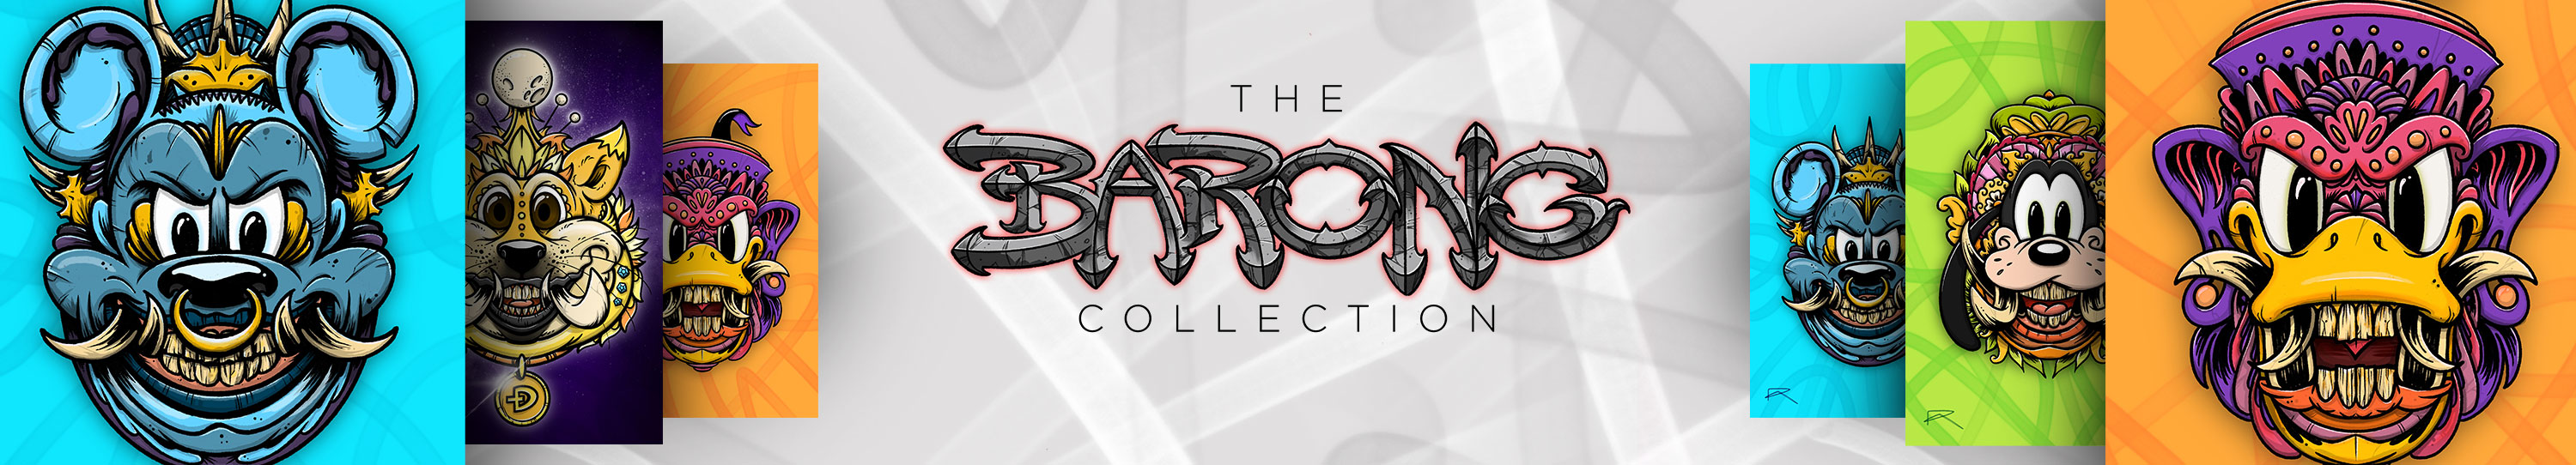 The Barong Collection